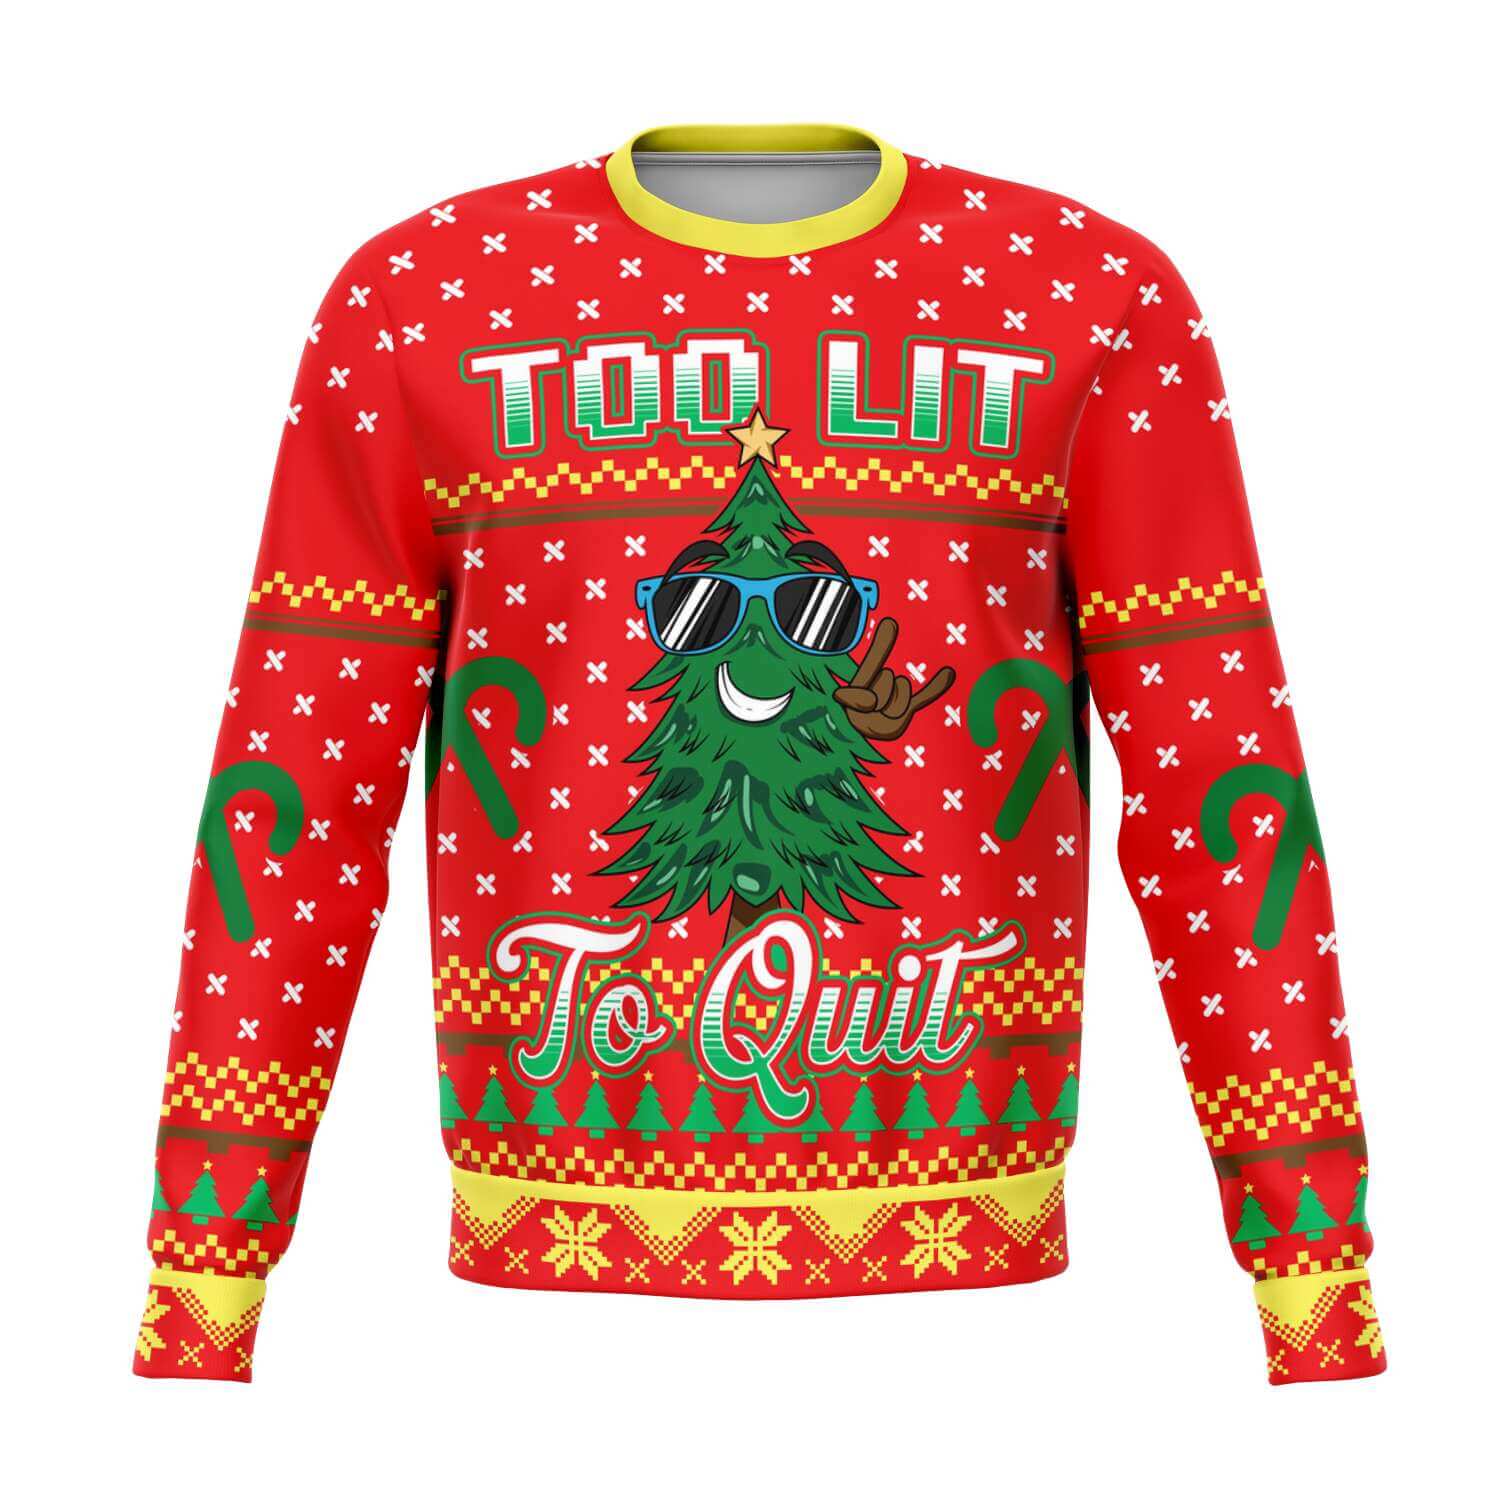 Too-lit-to-quit-Athletic-Fashion-sweatshirt